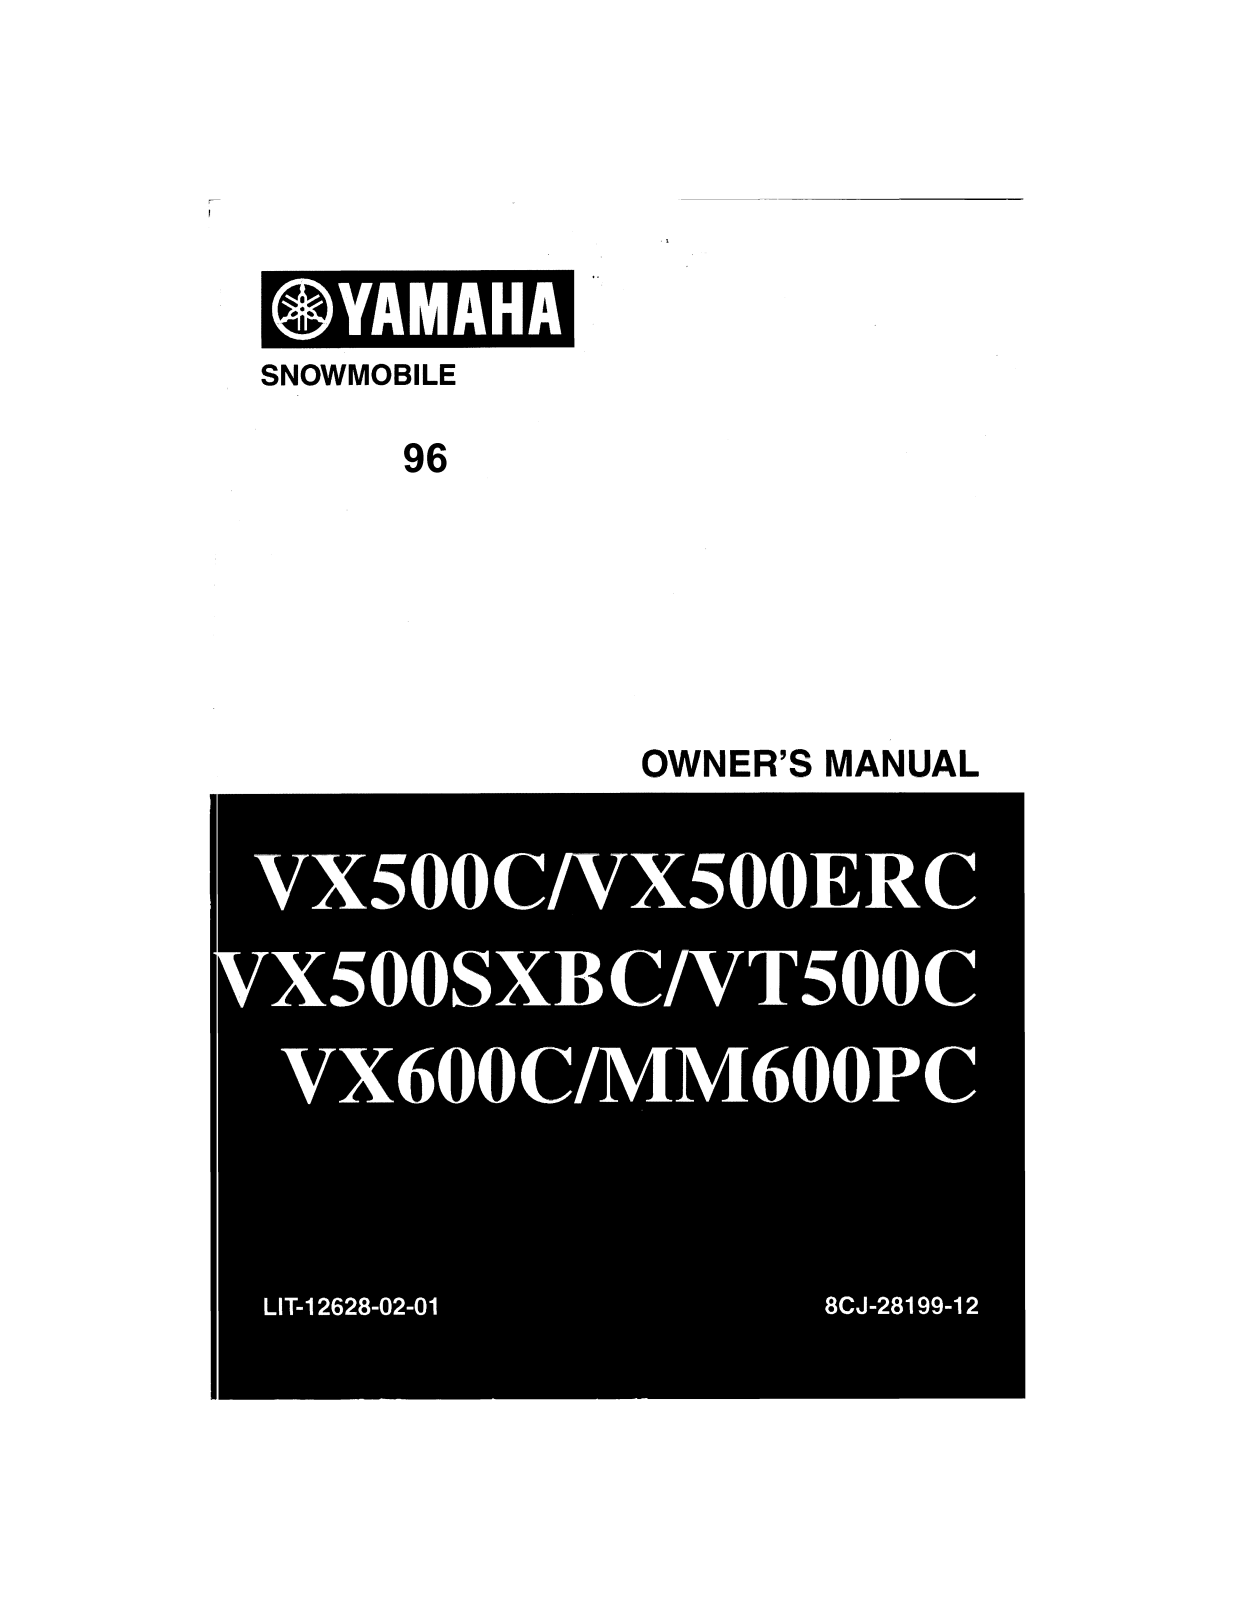 Yamaha VMAX 500 SX, VMAX 500, VMAX 600, MOUNTAIN MAX 600, VMAX 500 DELUXE Manual